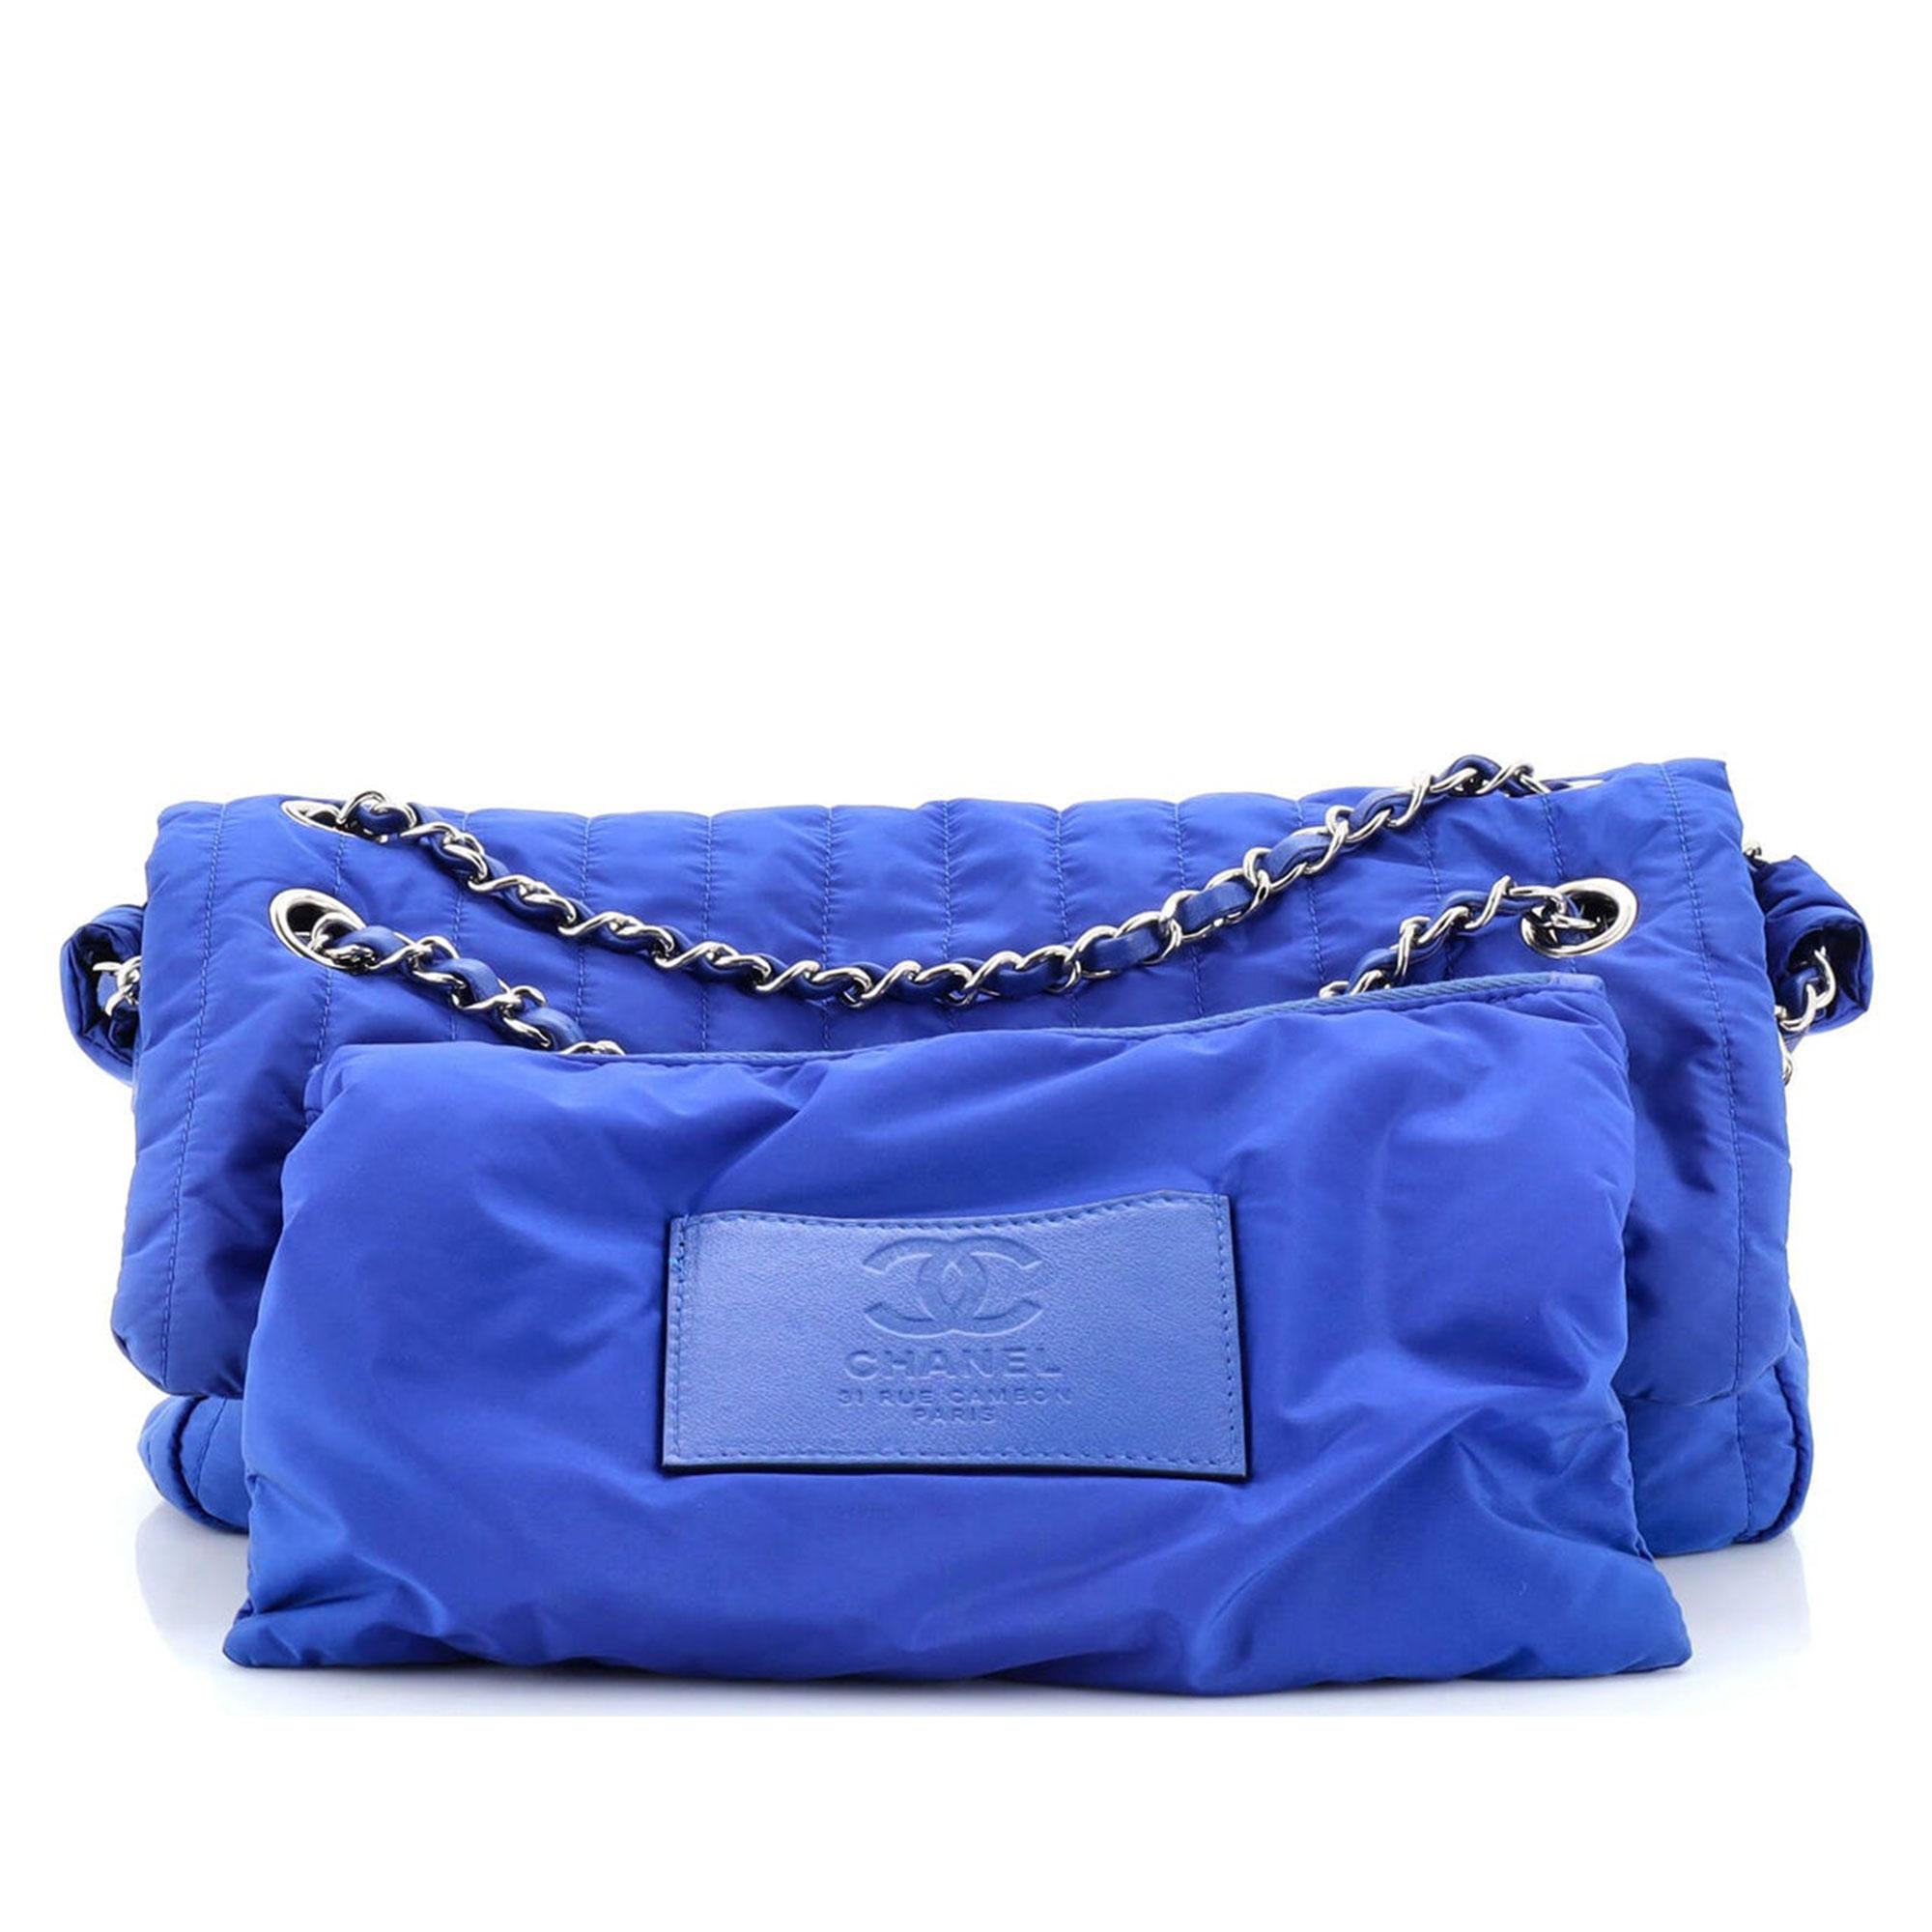 Chanel 2012 Quilted Microfiber Blue Nylon Shoulder Classic Flap Bag 3